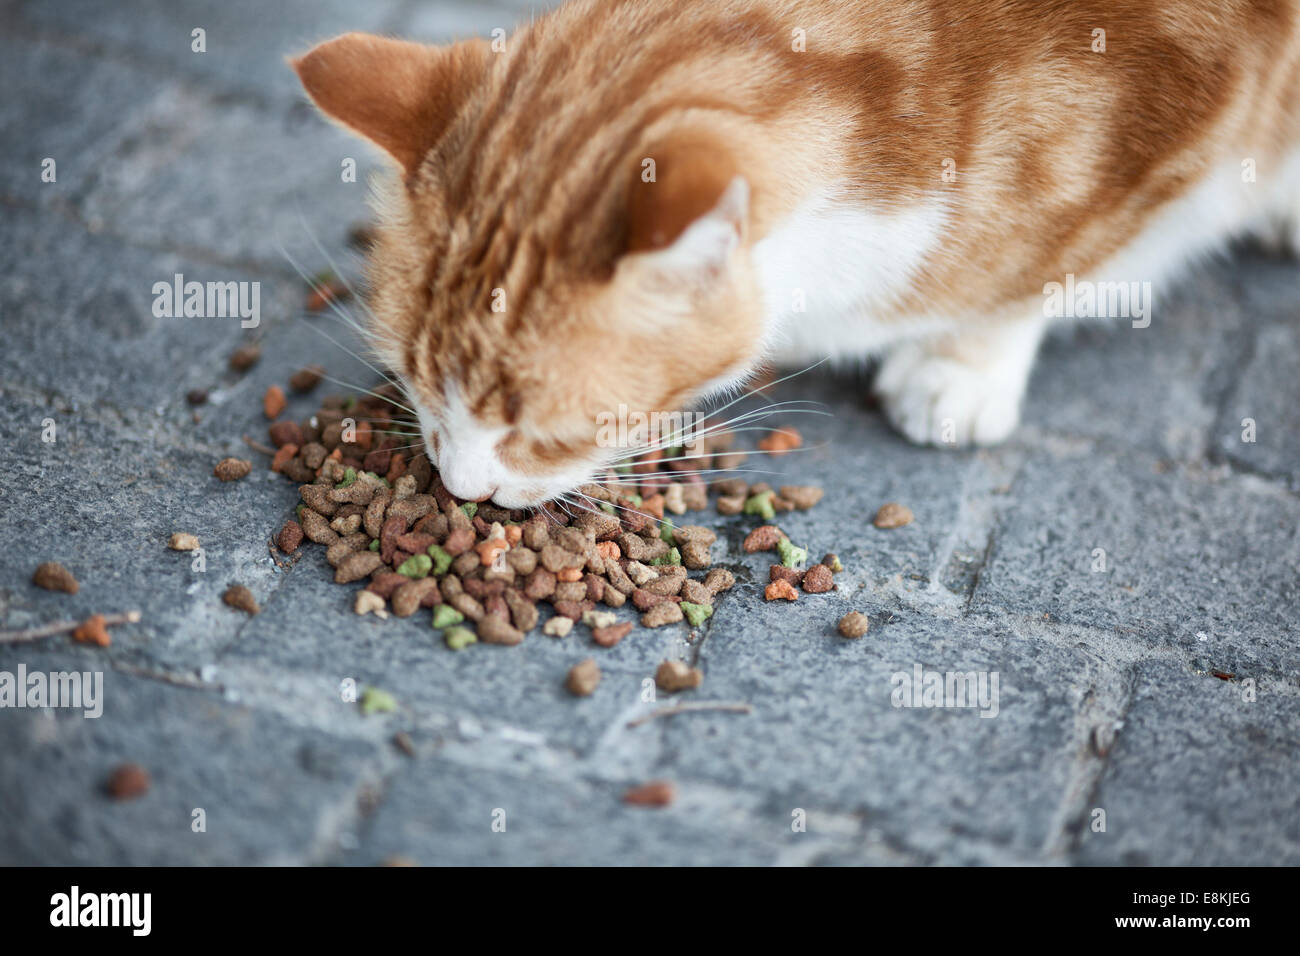 Abandoned street cat eating cat food. Stock Photo